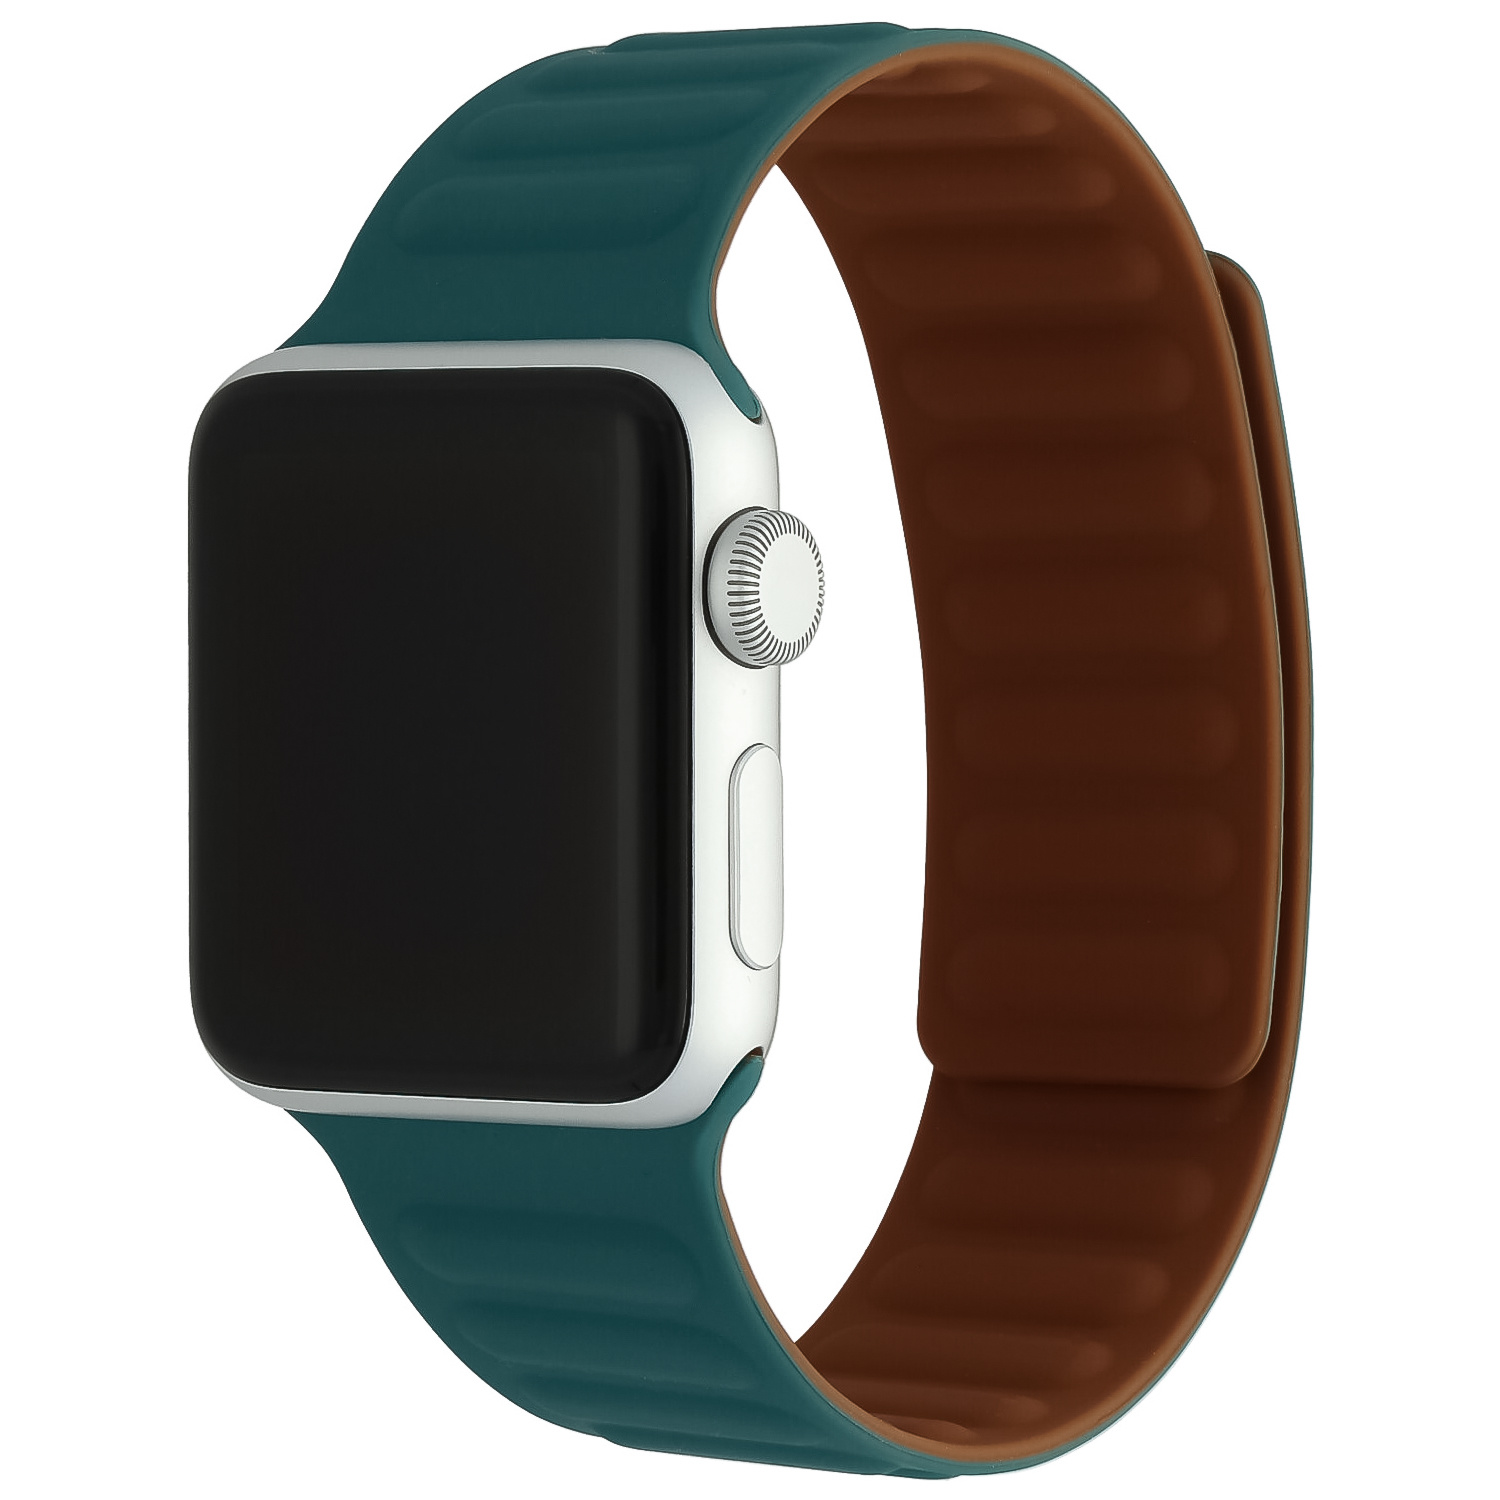 Bracelet sport solo côtelé Apple Watch - malachite green